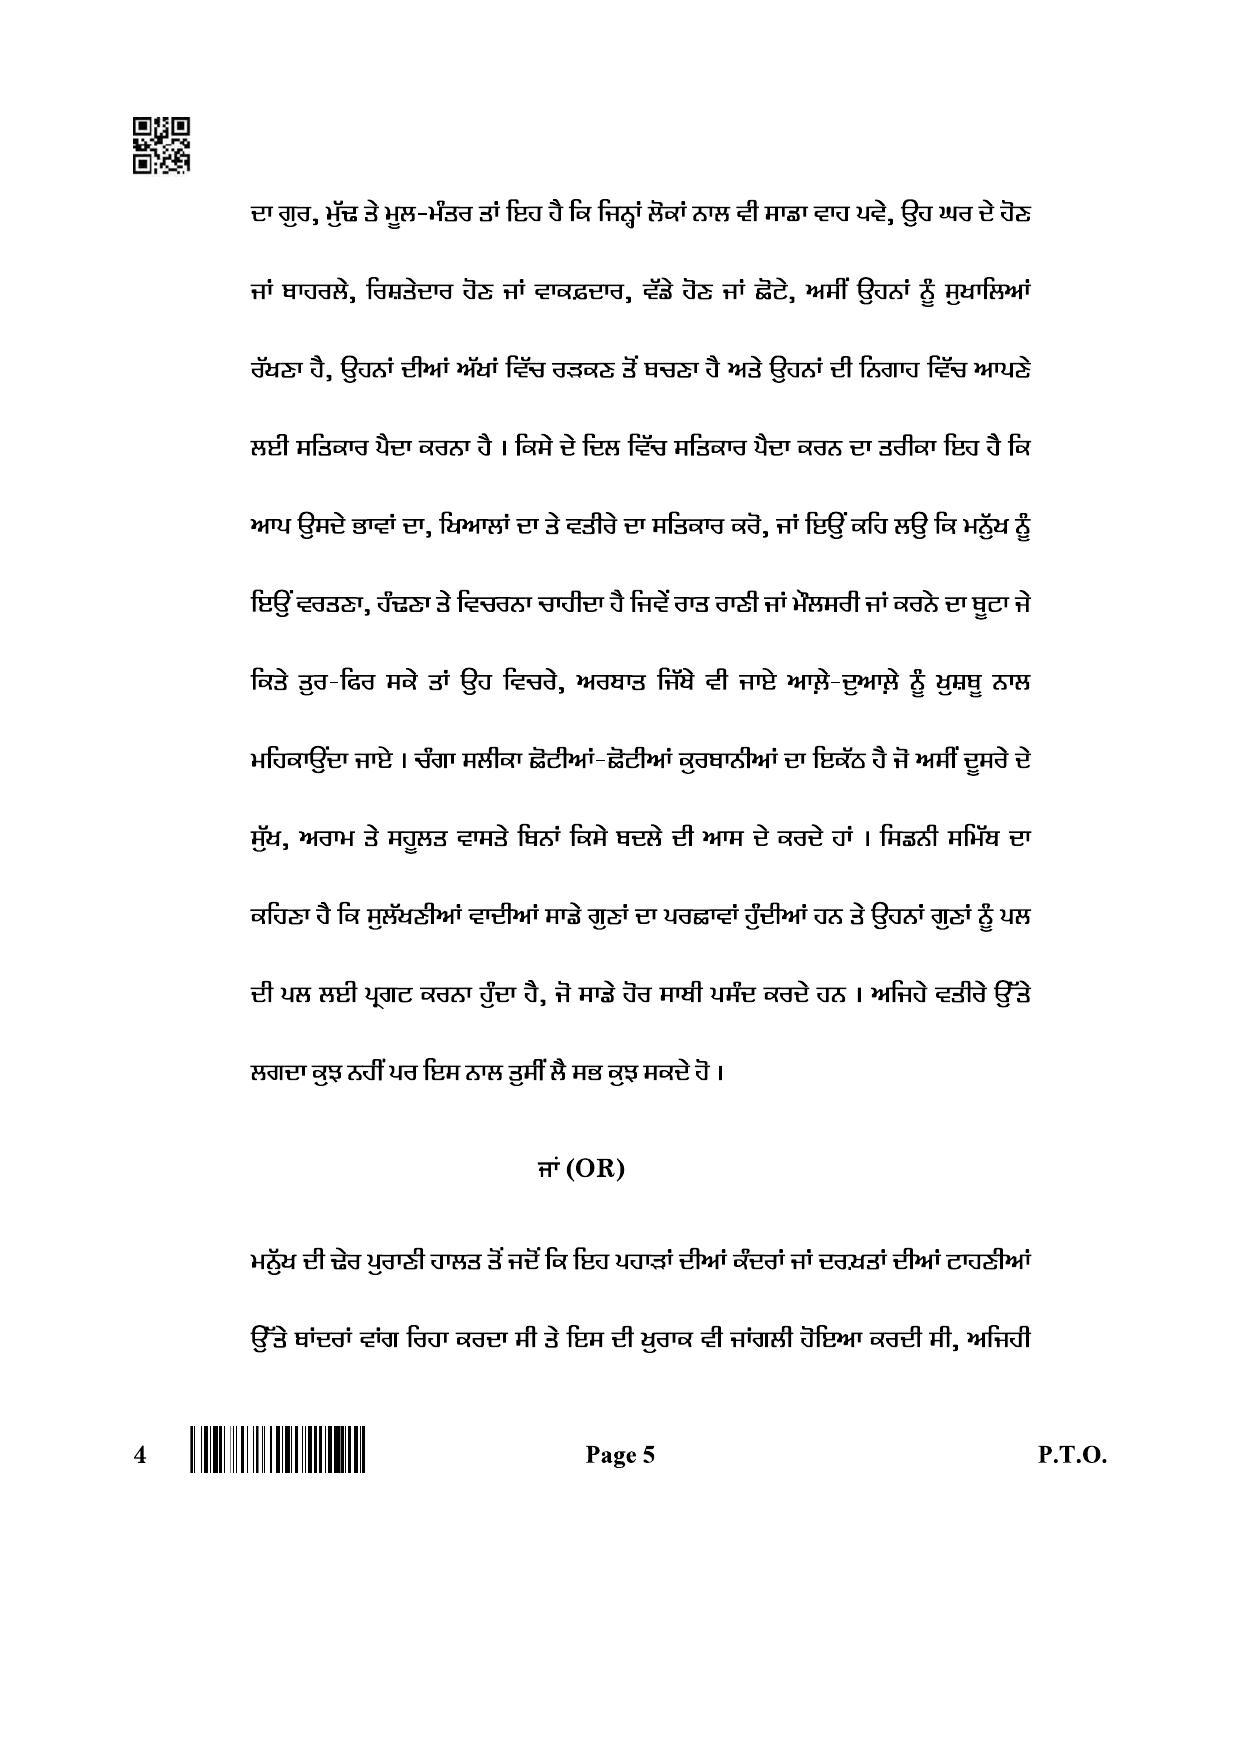 CBSE Class 12 4_Punjabi 2022 Question Paper - Page 5